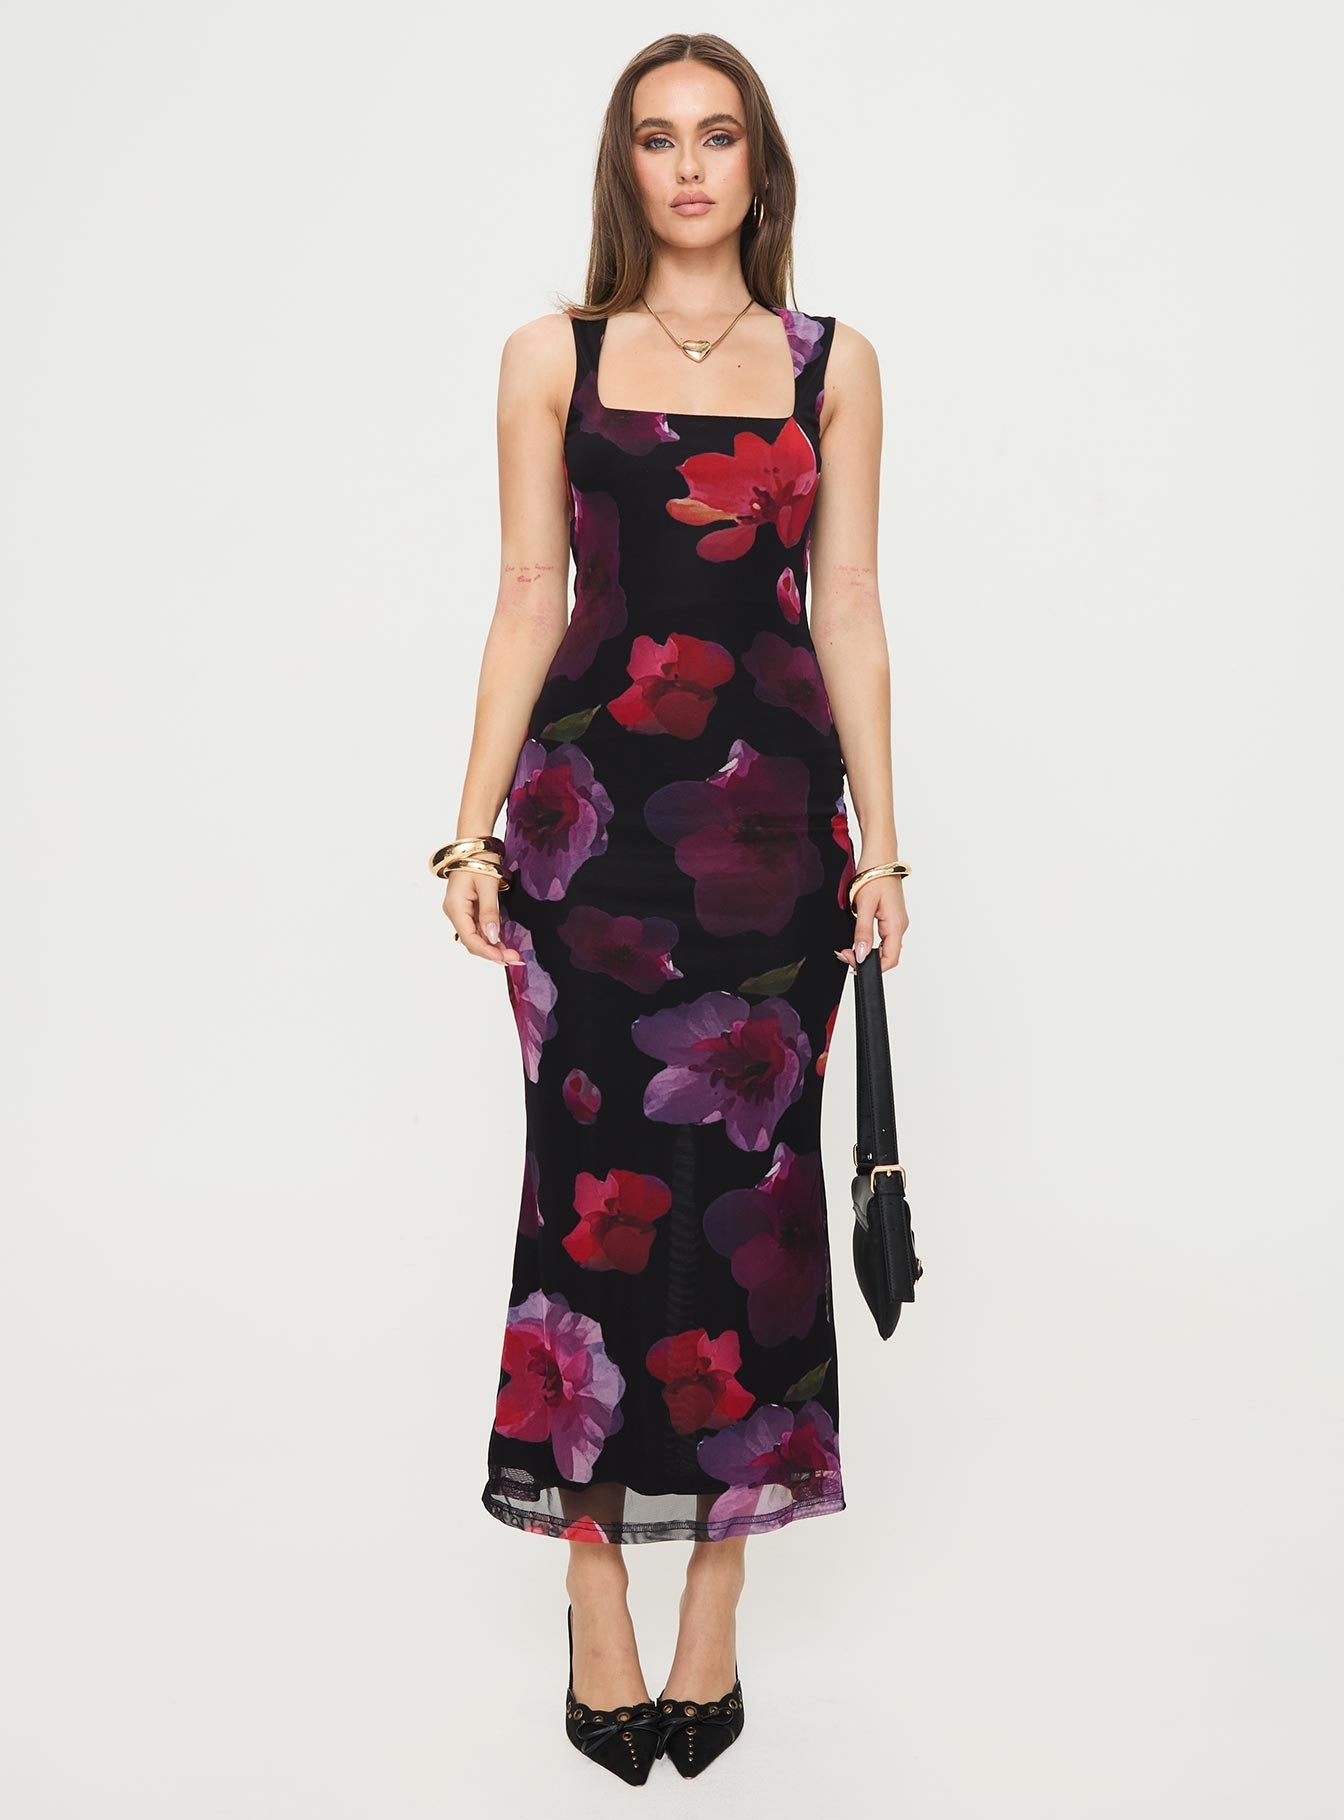 Shop Formal Dress - Eviana Maxi Dress Floral third image